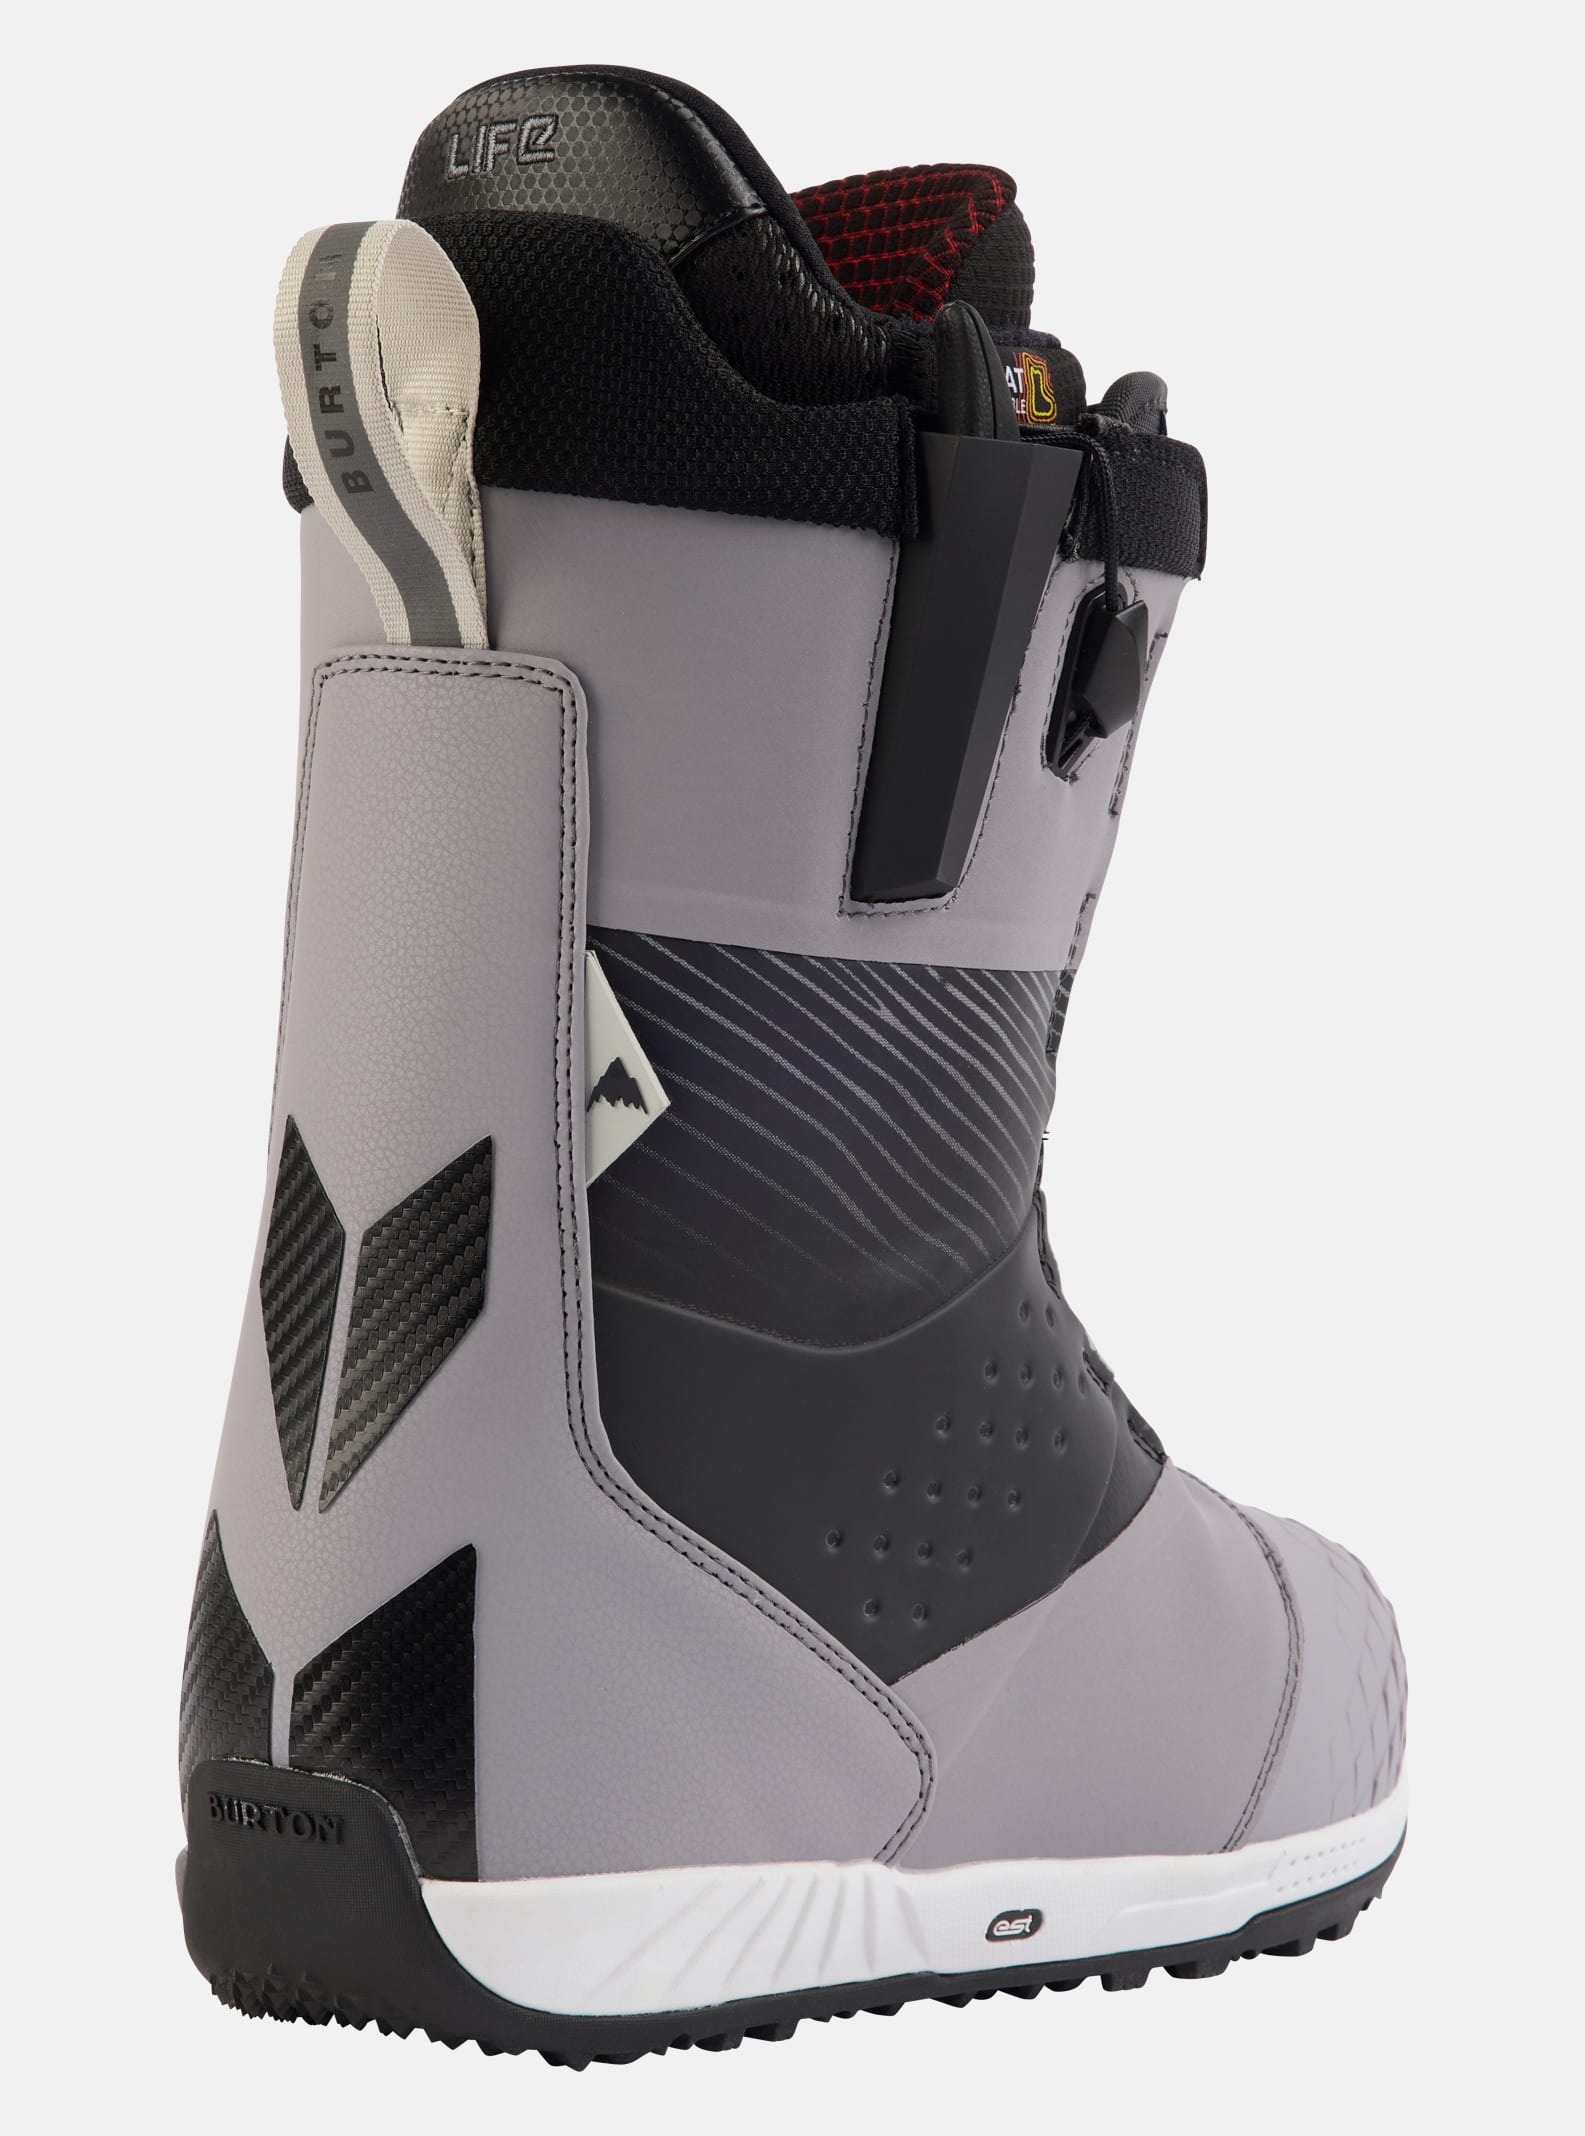 Men's Ion Snowboard Boots | Burton.com Winter 2023 US